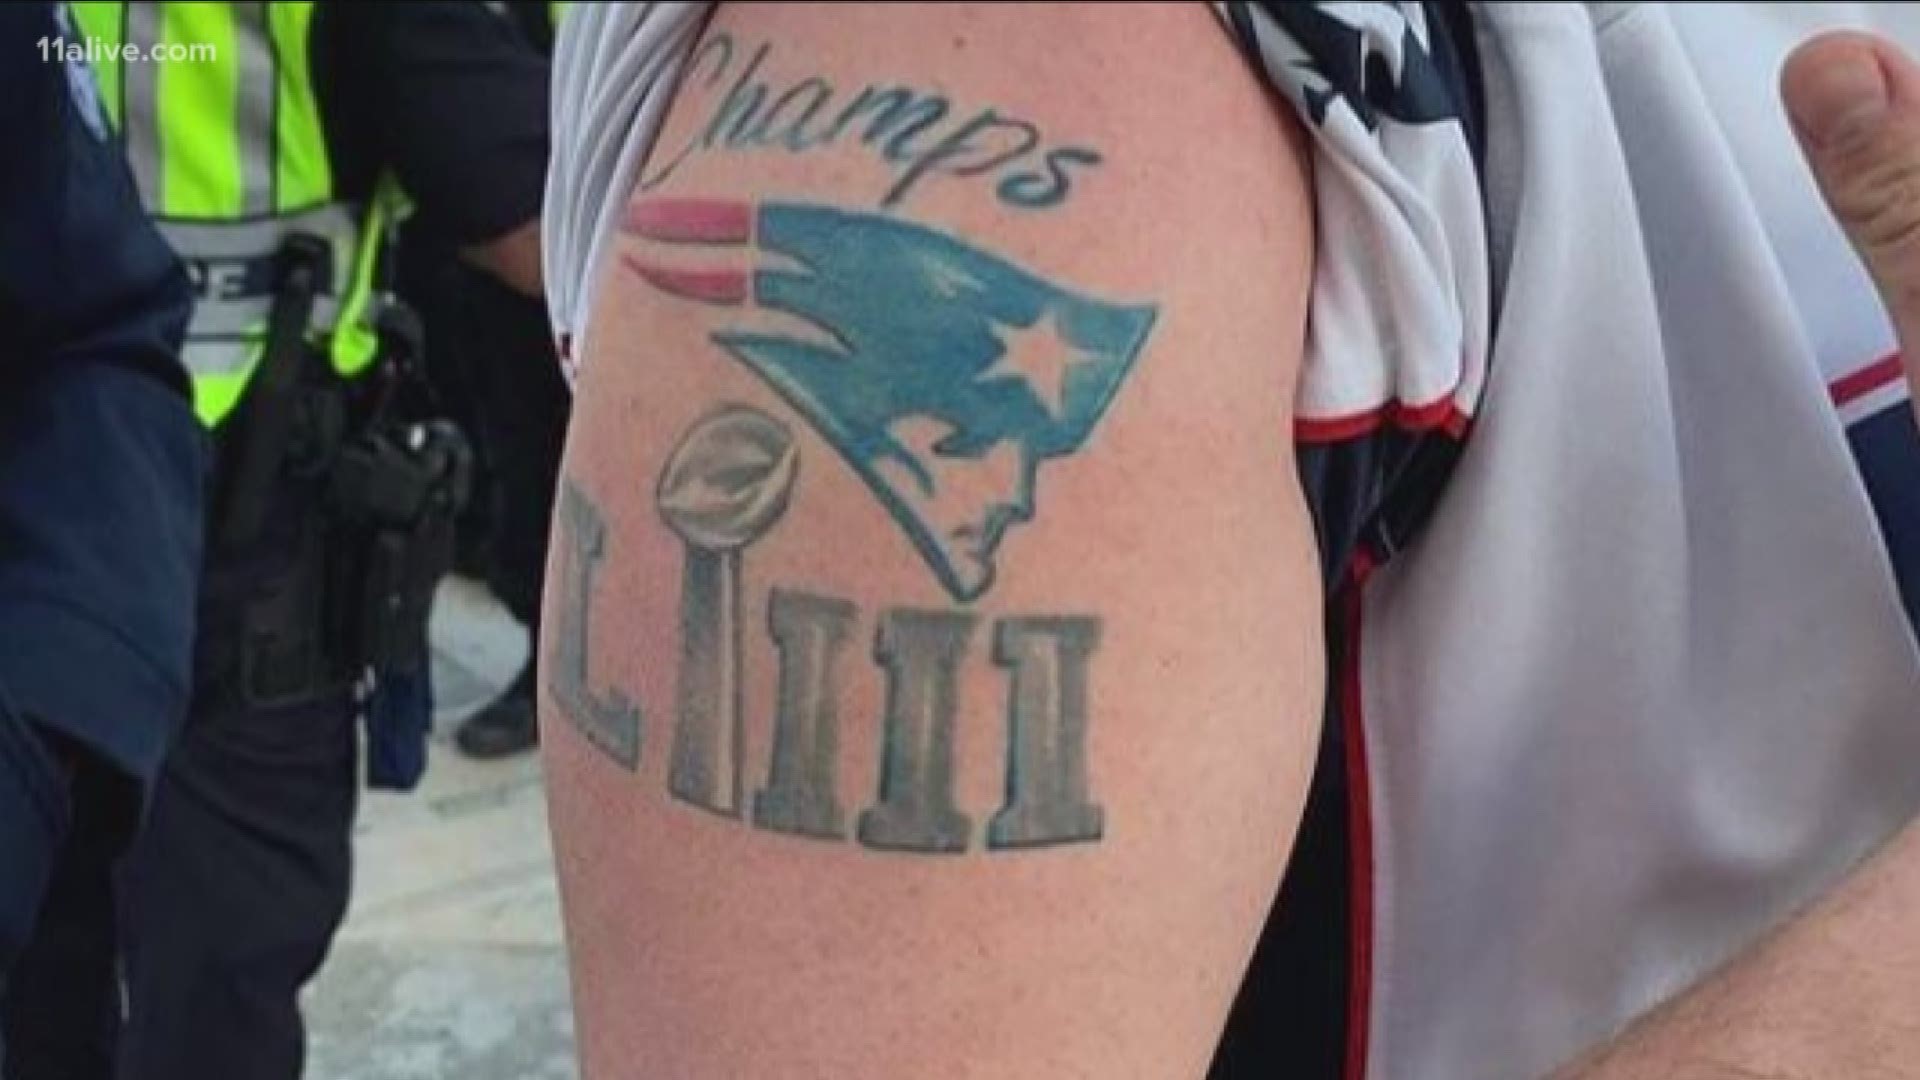 Eagles fan tattoos Super Bowl 52 prediction across his chest